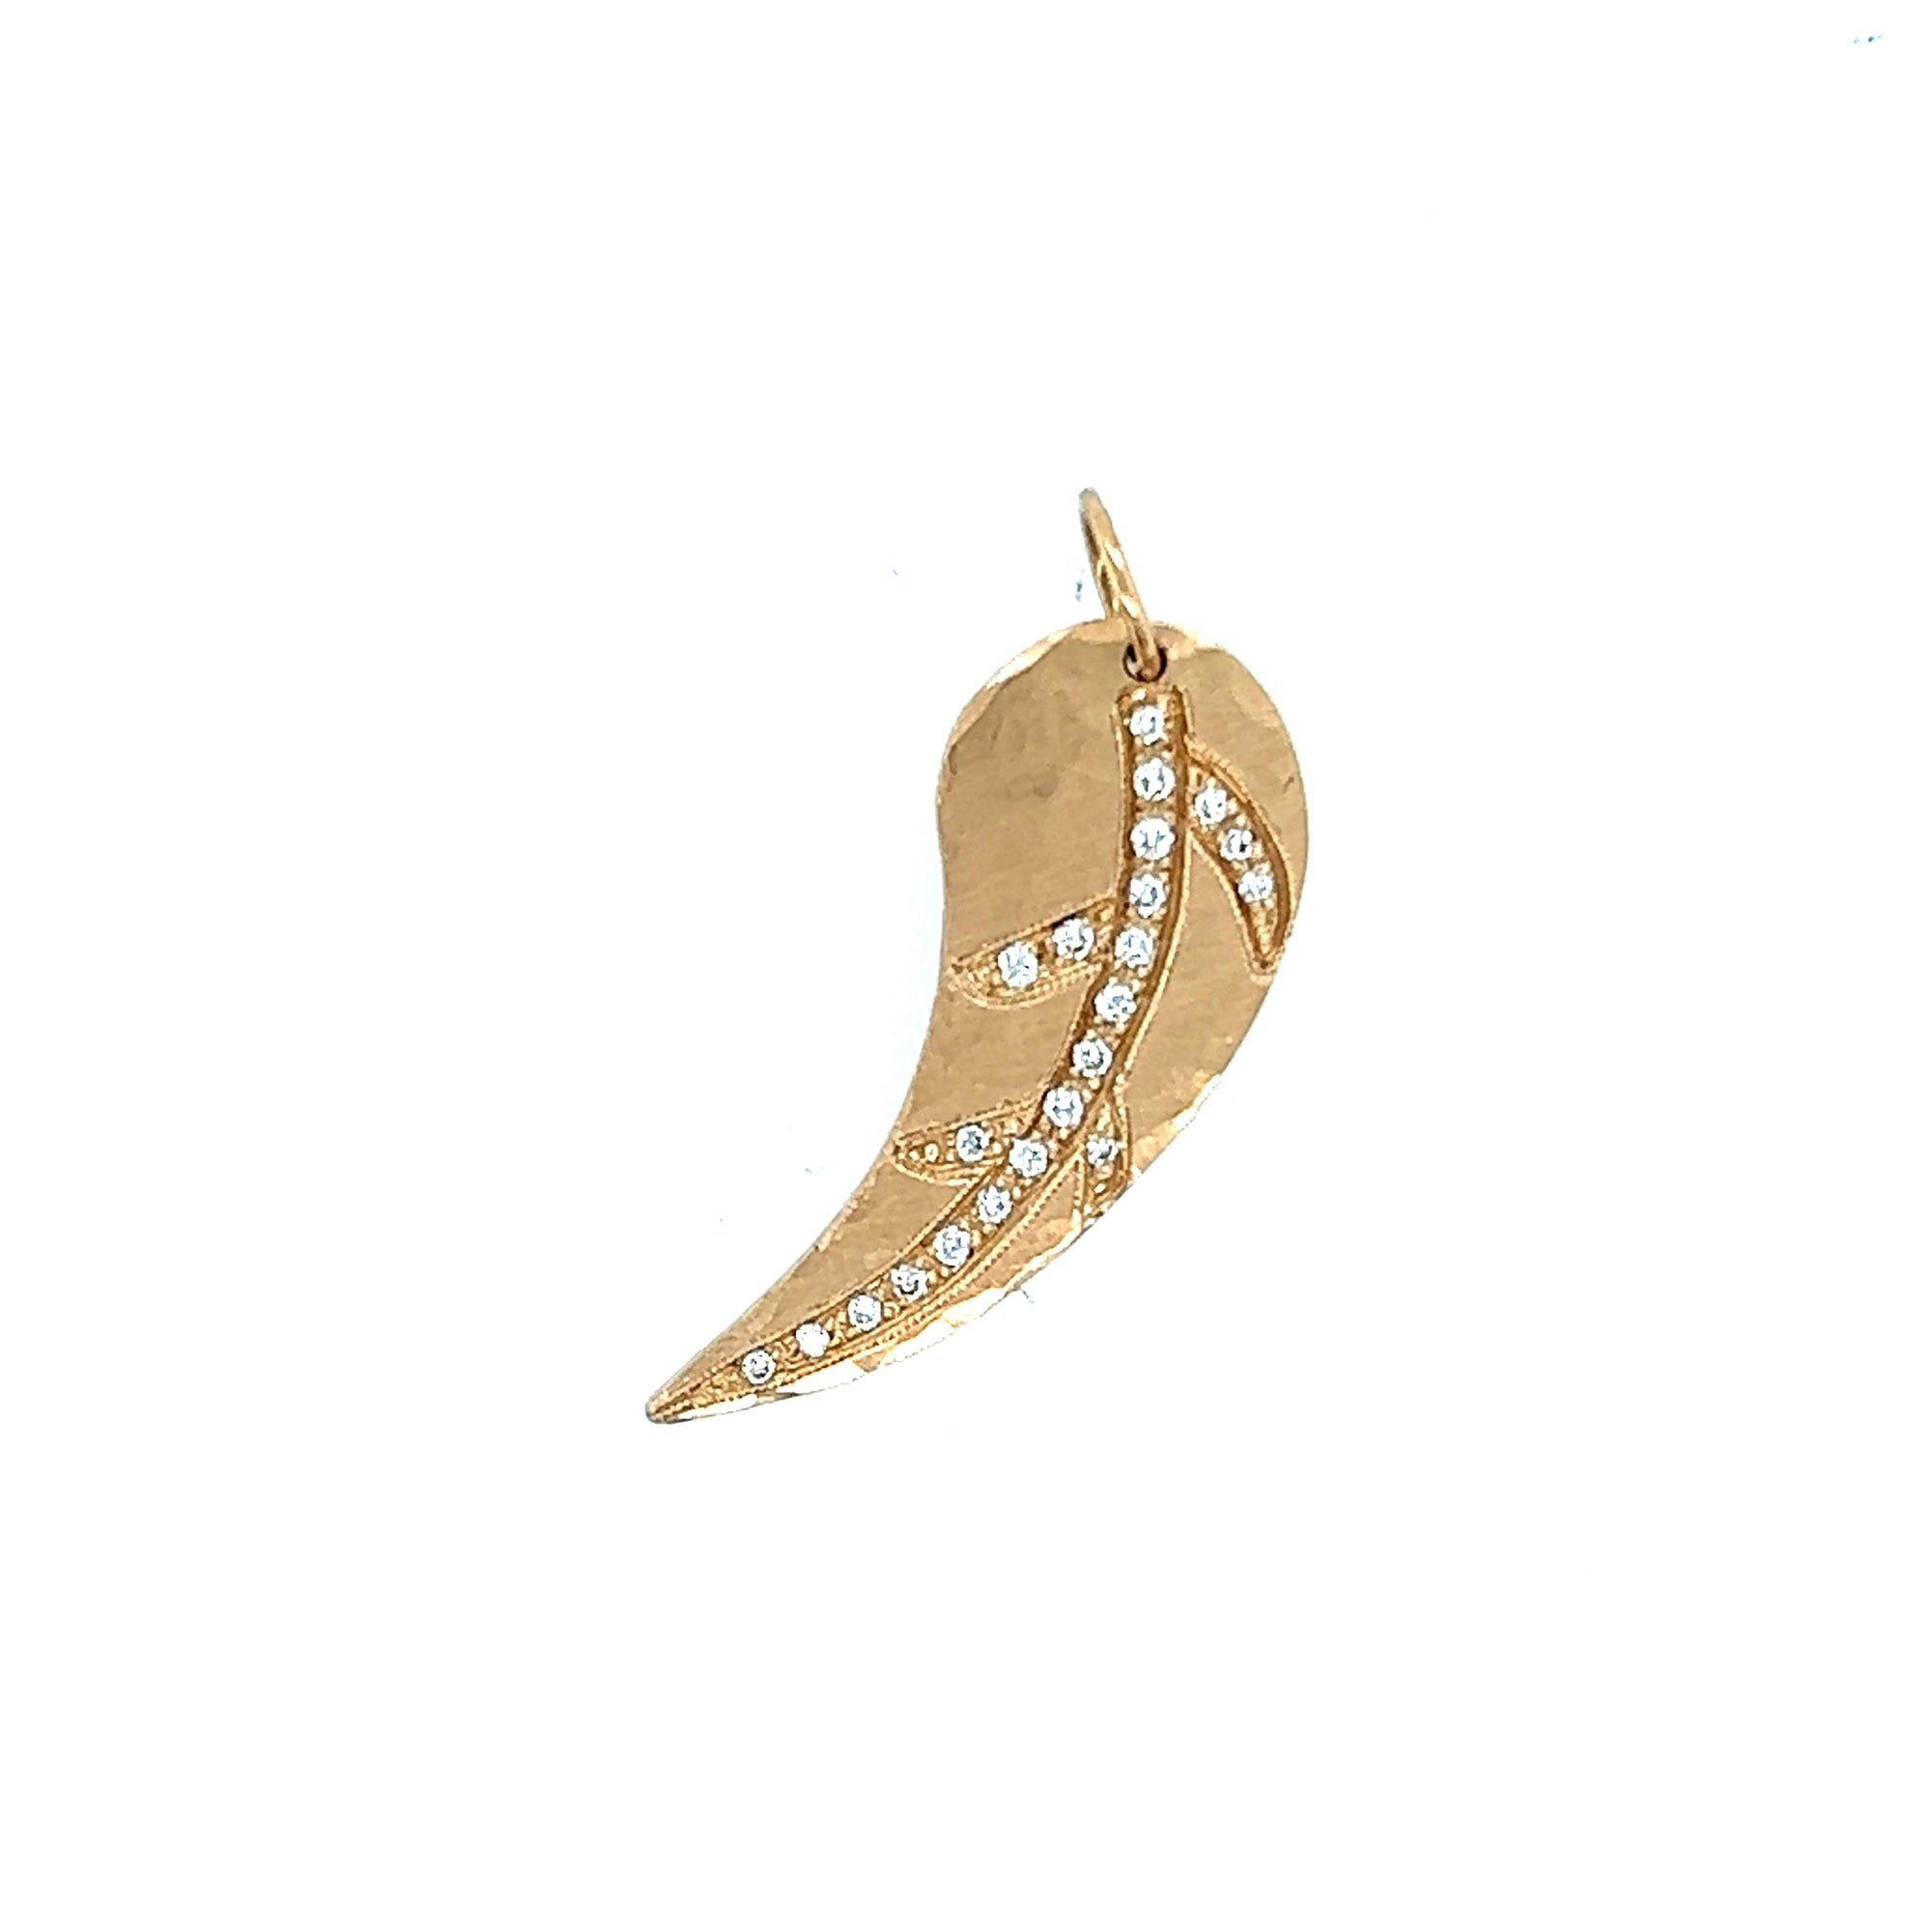 ARLA 14k Gold Small Leaf Pendant